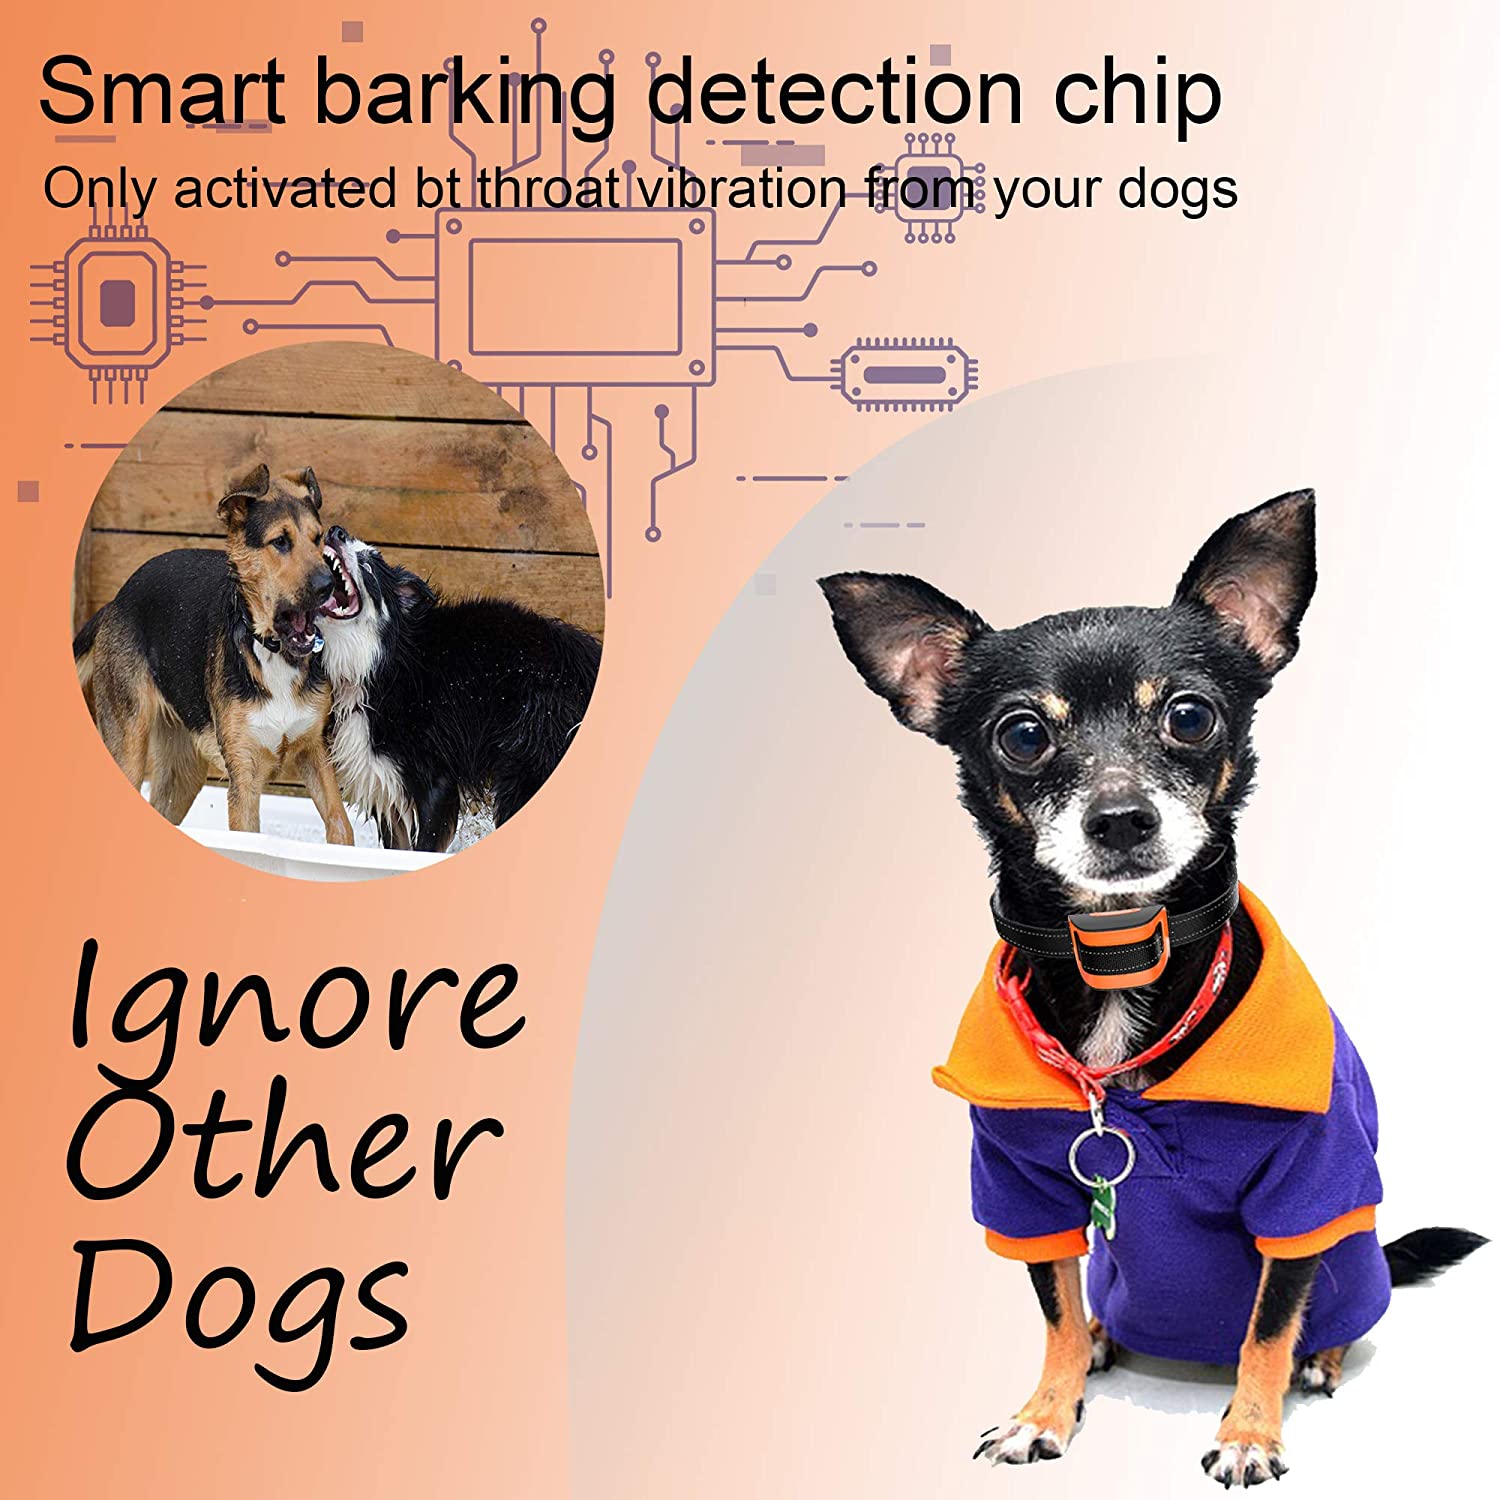 MASBRILL Dog Bark Collar - Upgrade 2020 Safe No Bark Control Device for Tiny Small Medium Dog - e4cents